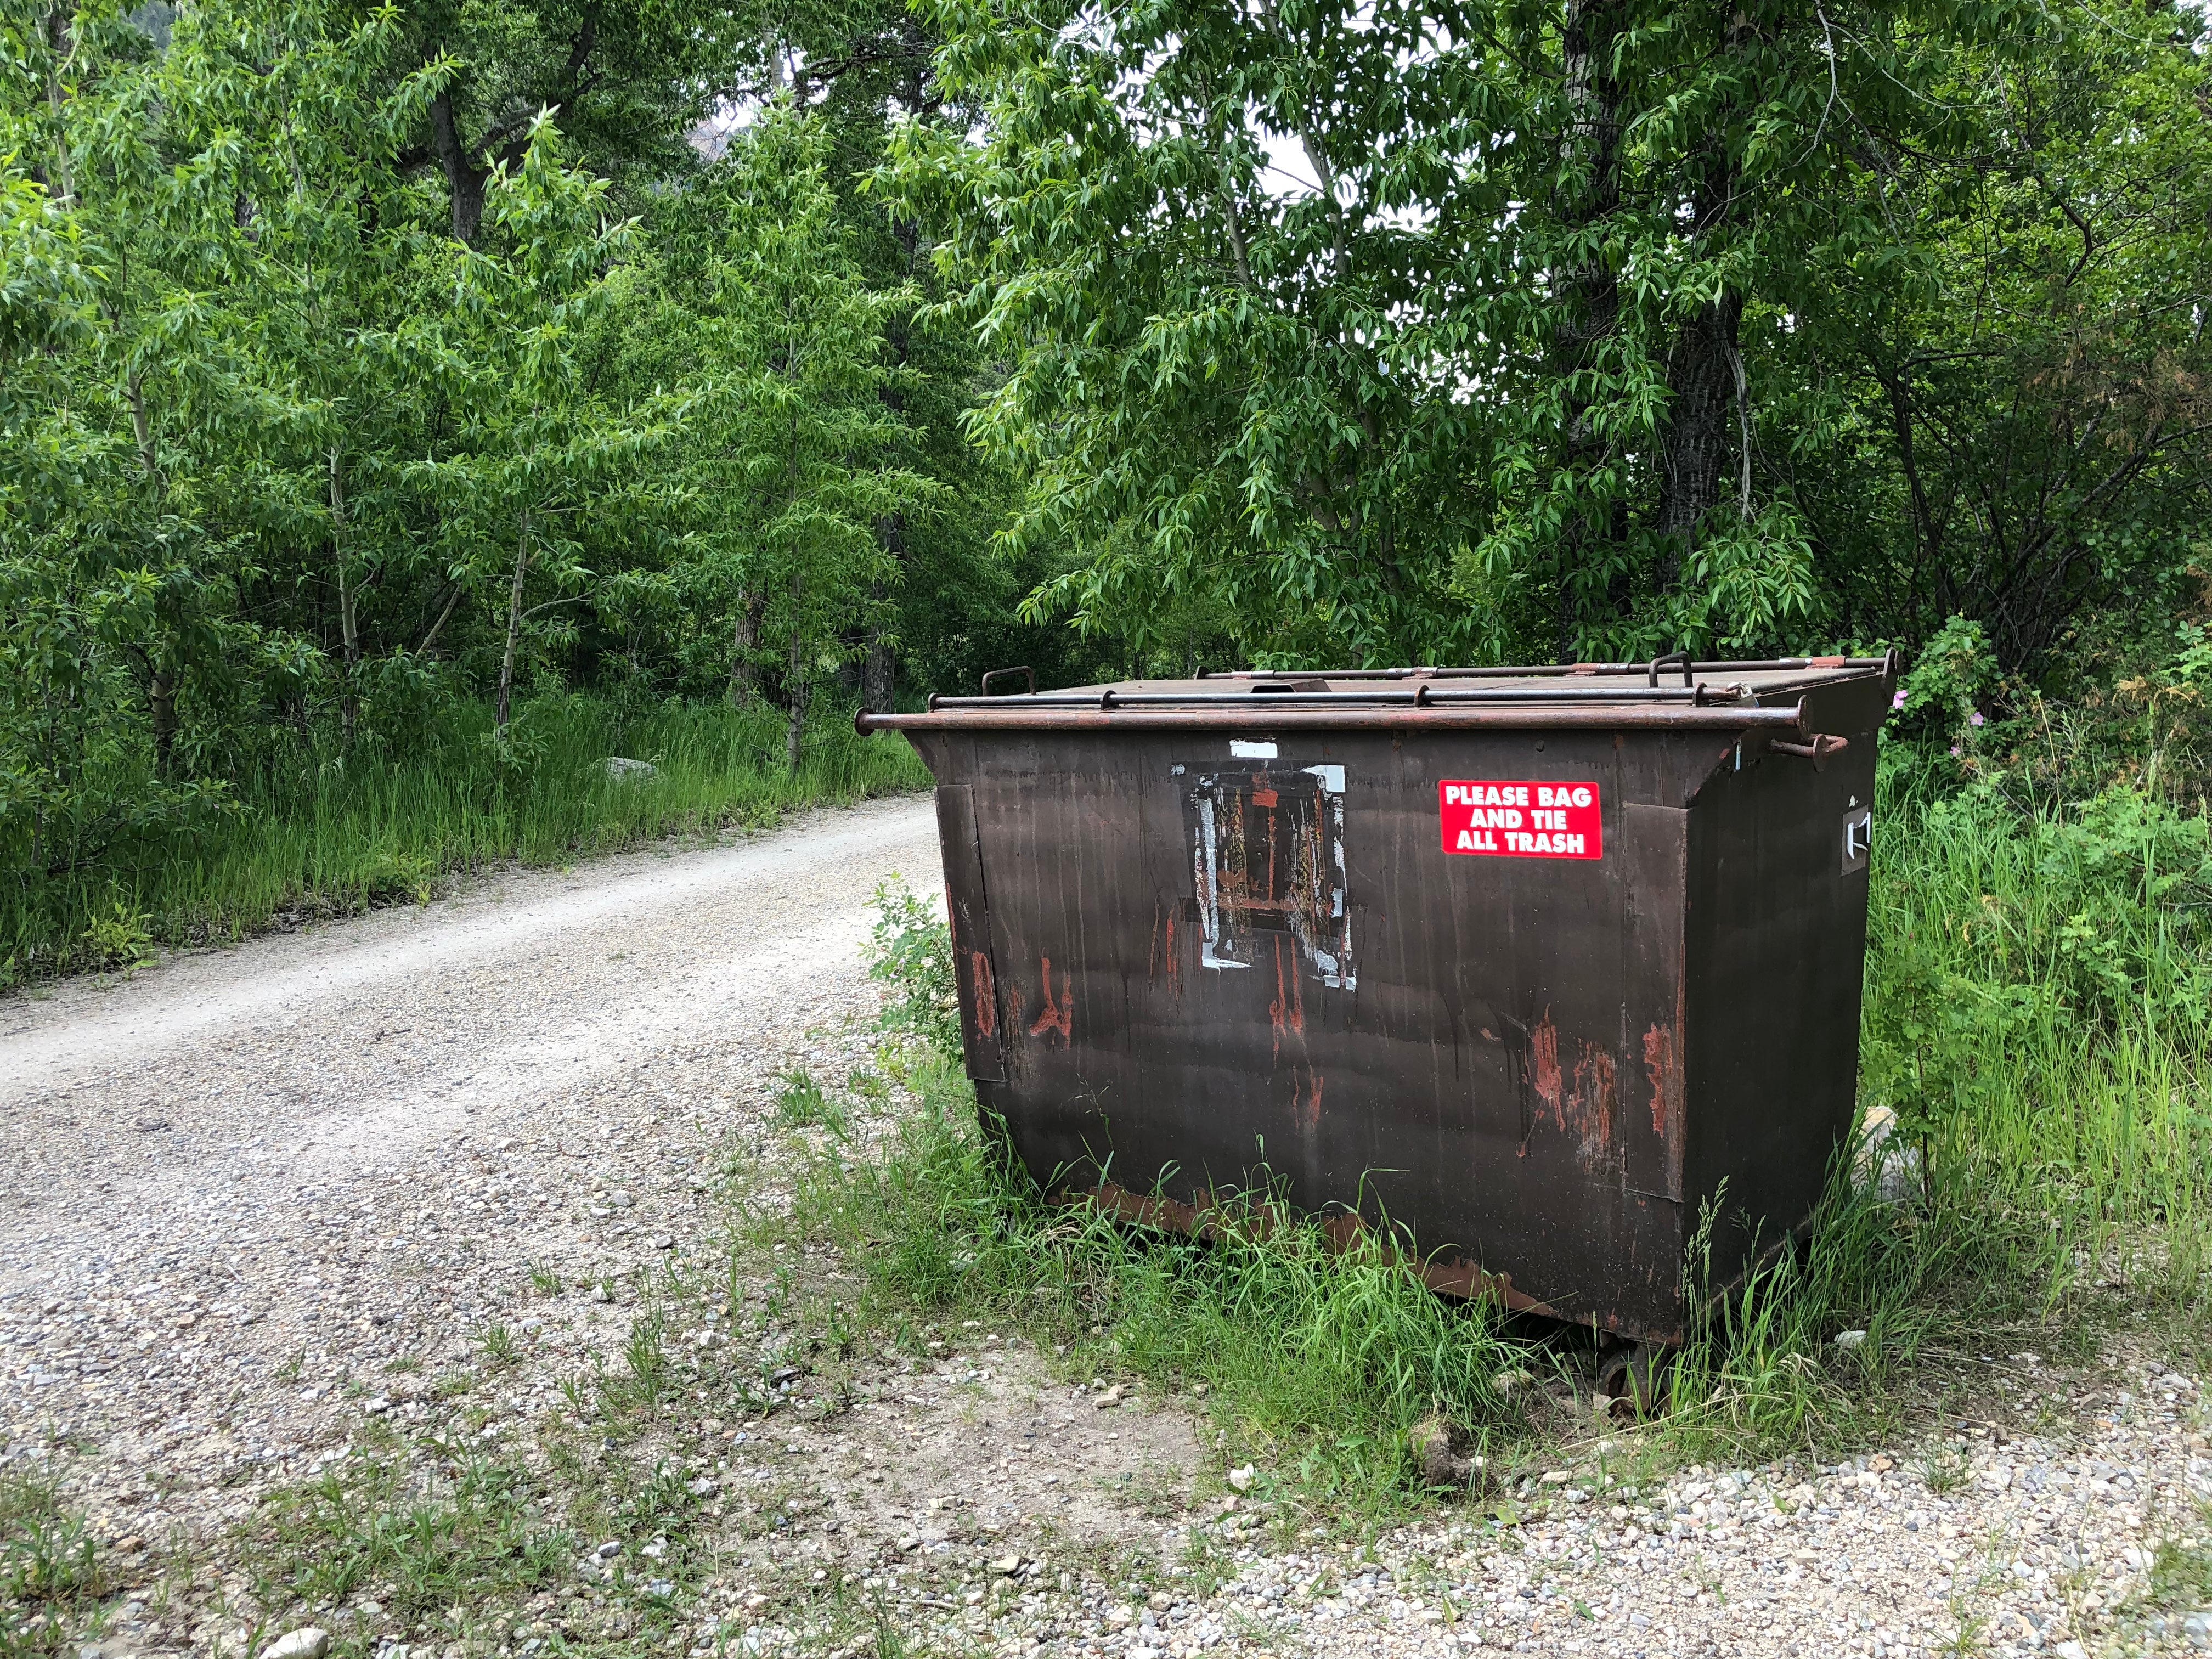 Garbage bin is on the hosts side of the creek